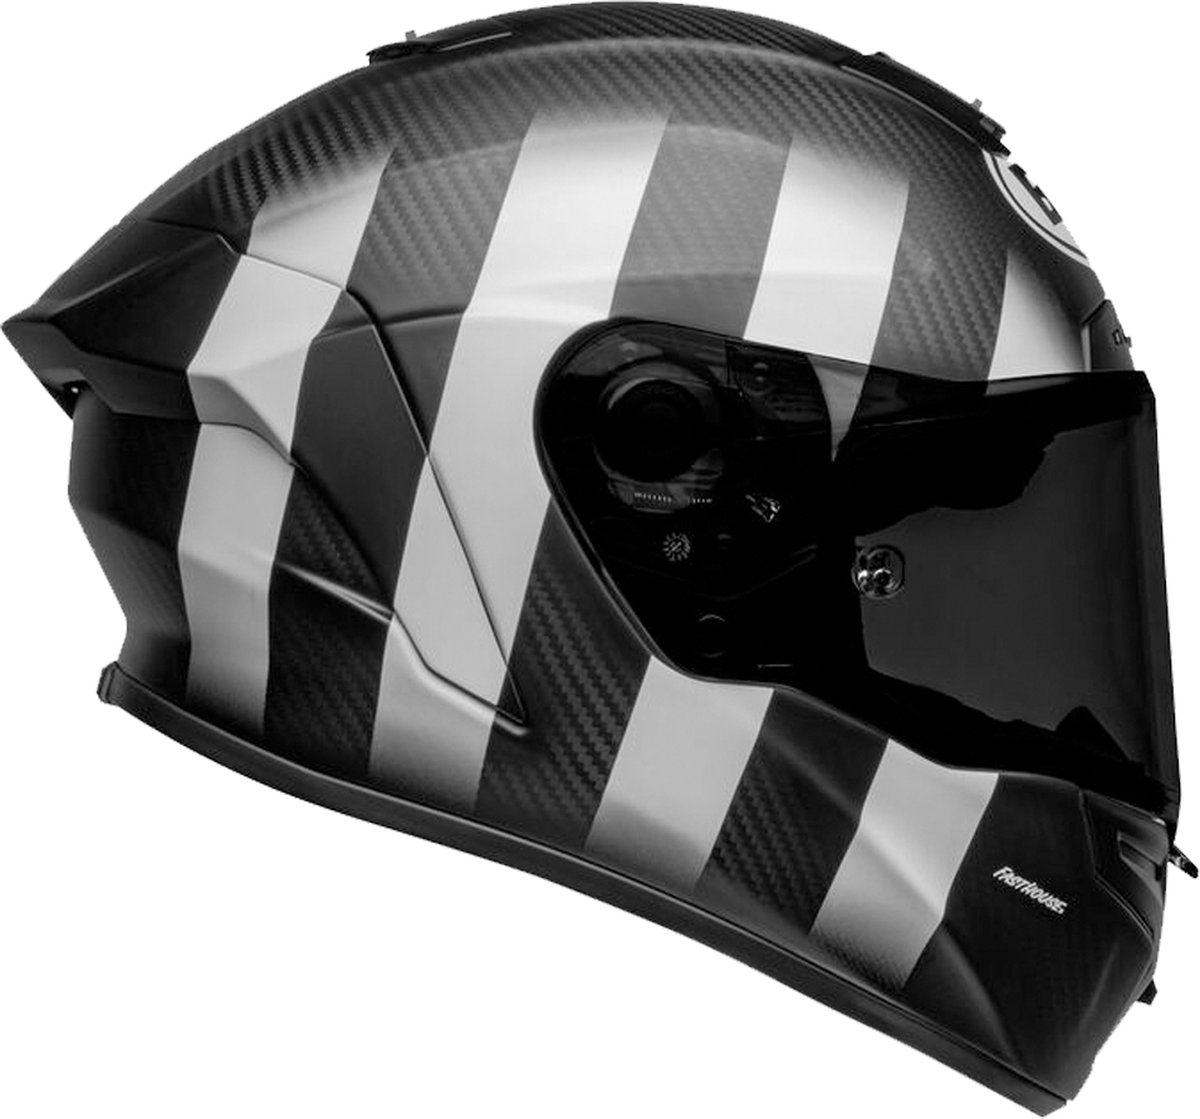 Bell Race Star Dlx Flex Fasthouse Street Punk Replica Matte Black Helmet Full Face L - Maat L - Helm